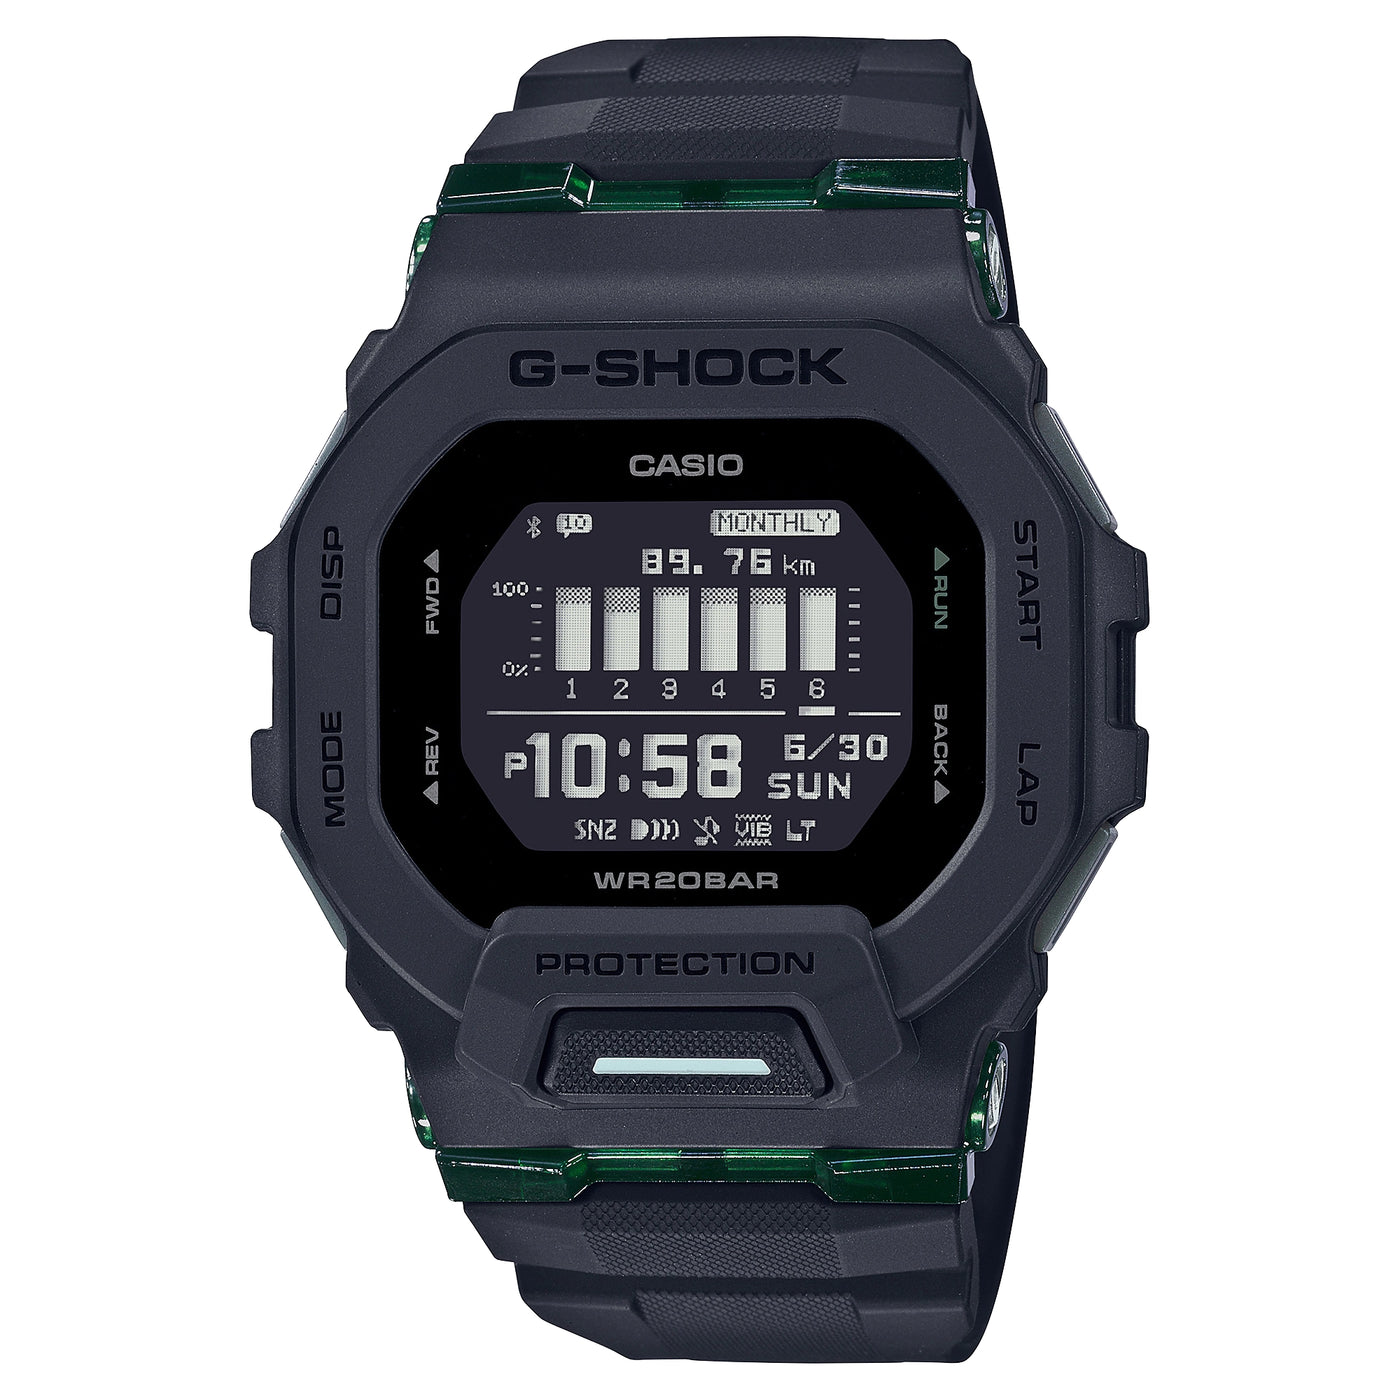 Orologio G-Shock GBD-200UU-1ER nero e verde per runners